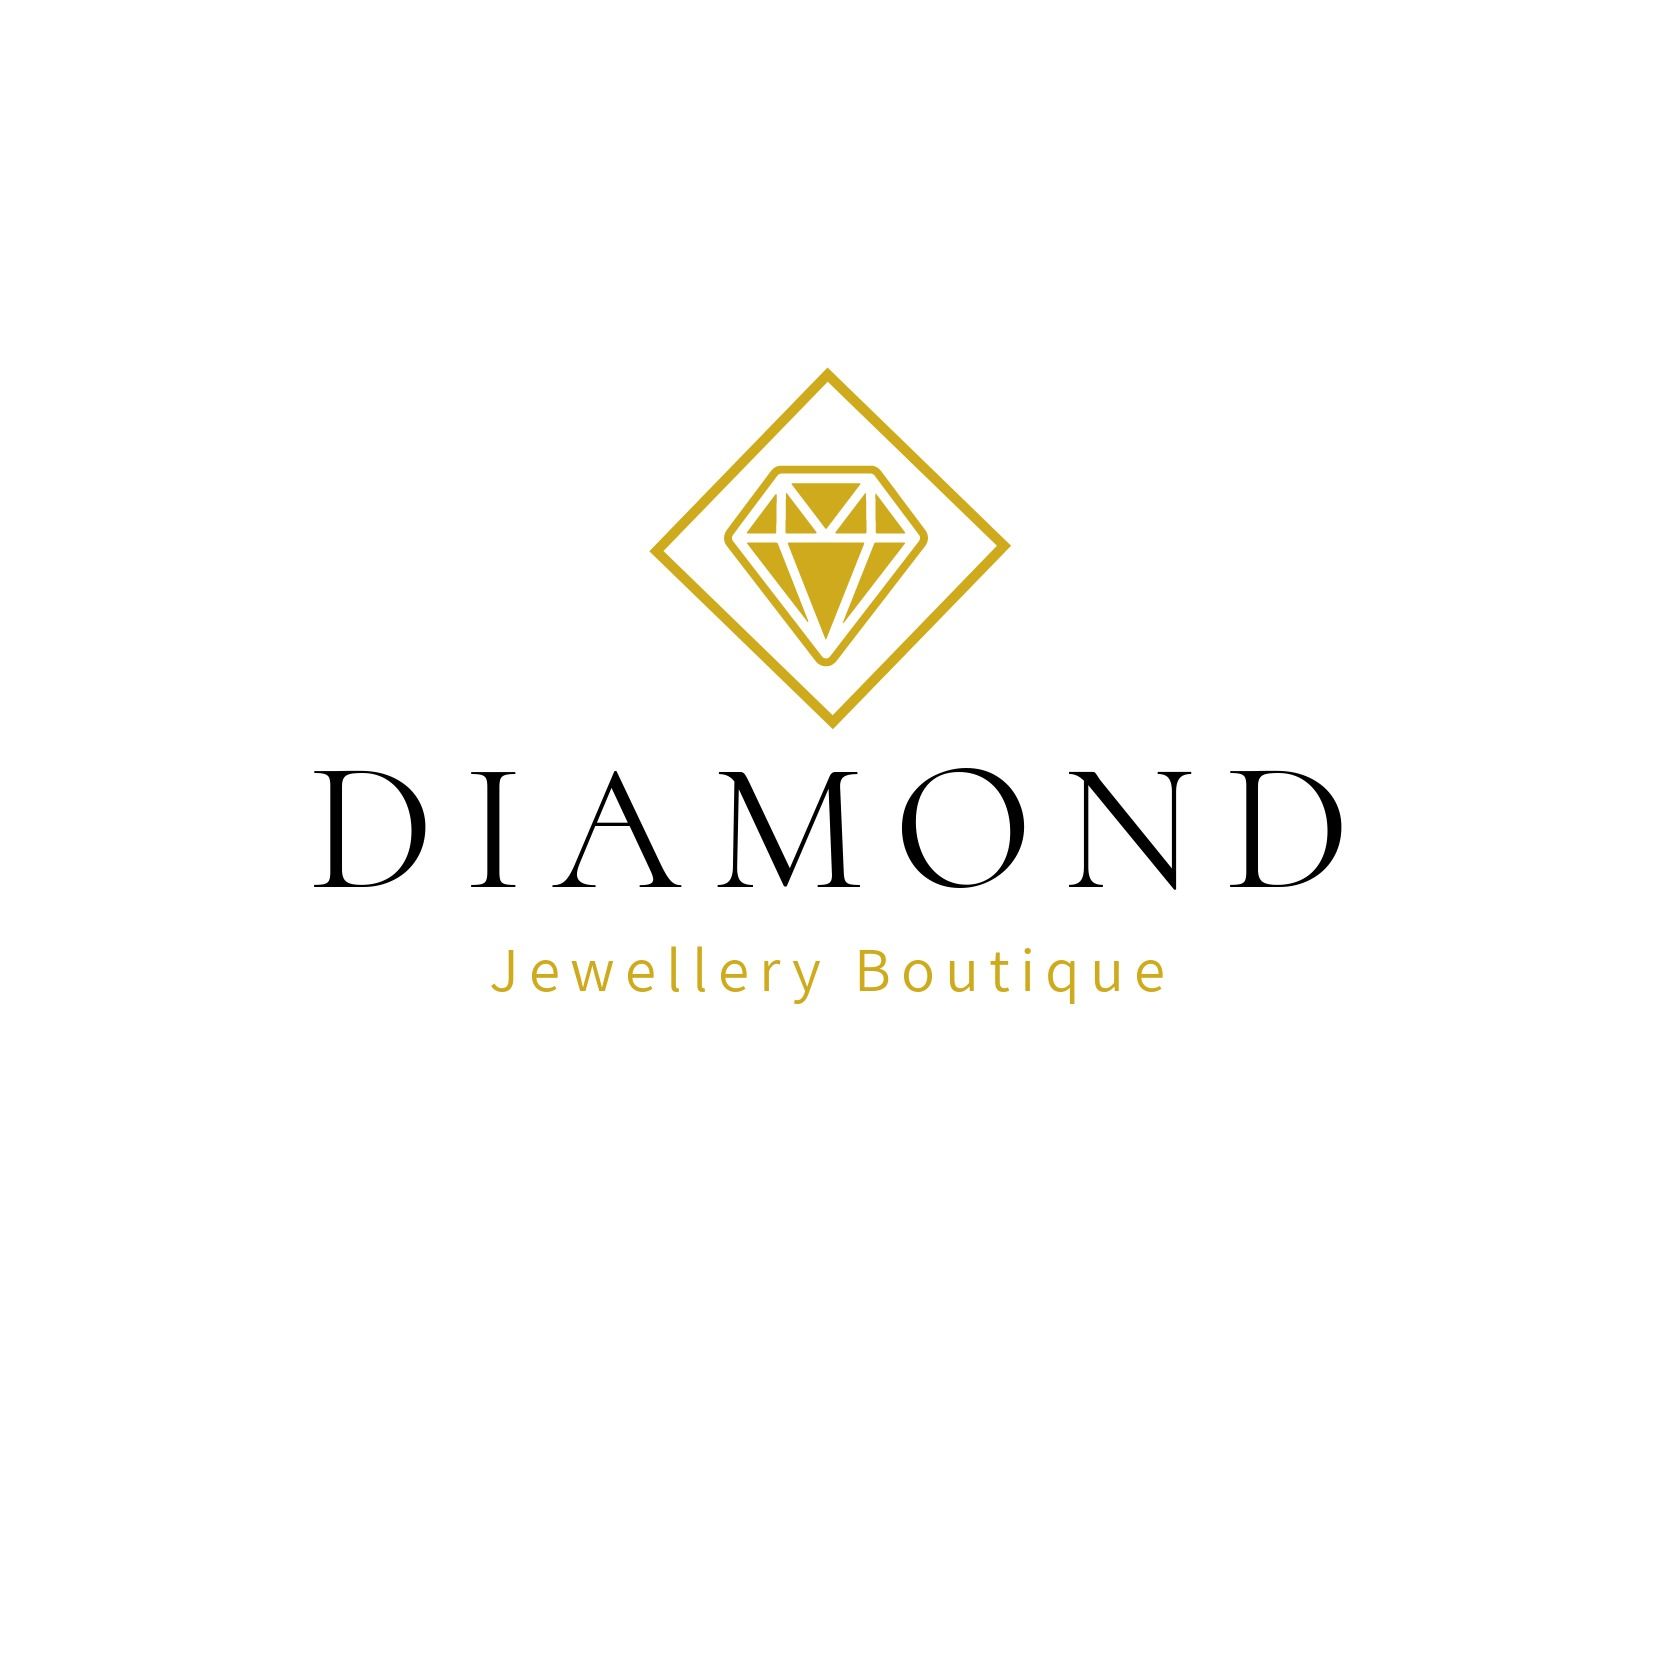 Diamond wedding creative logo designs - A step-by-step guide to creative logo design - Image